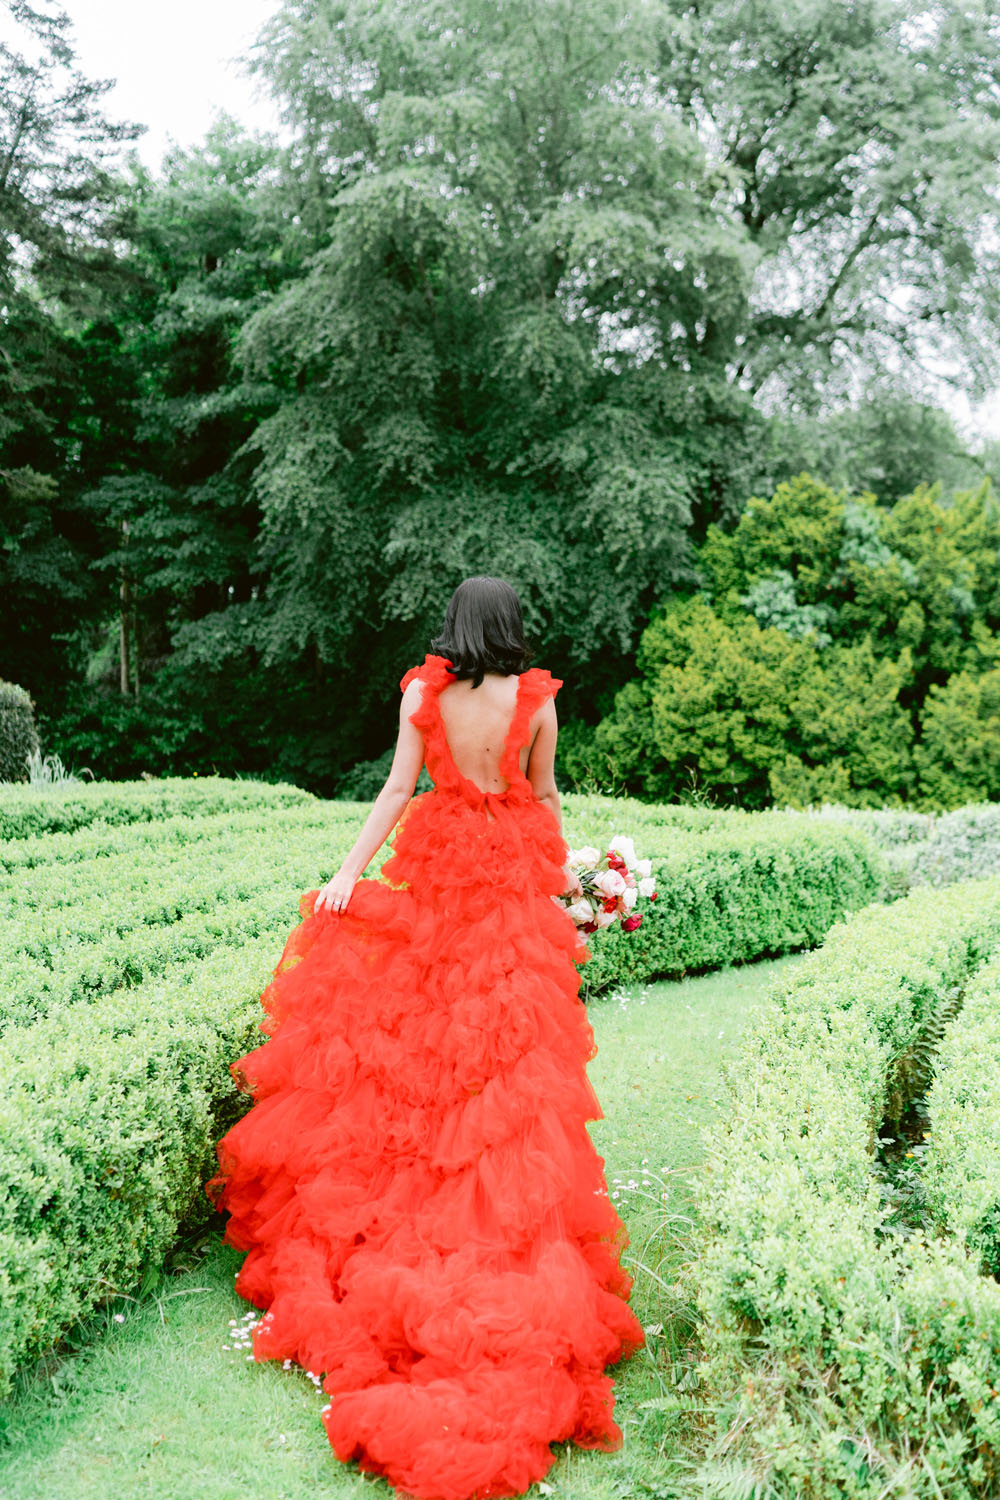 Glamorous Valentine's Day wedding ideas with a red wedding dress